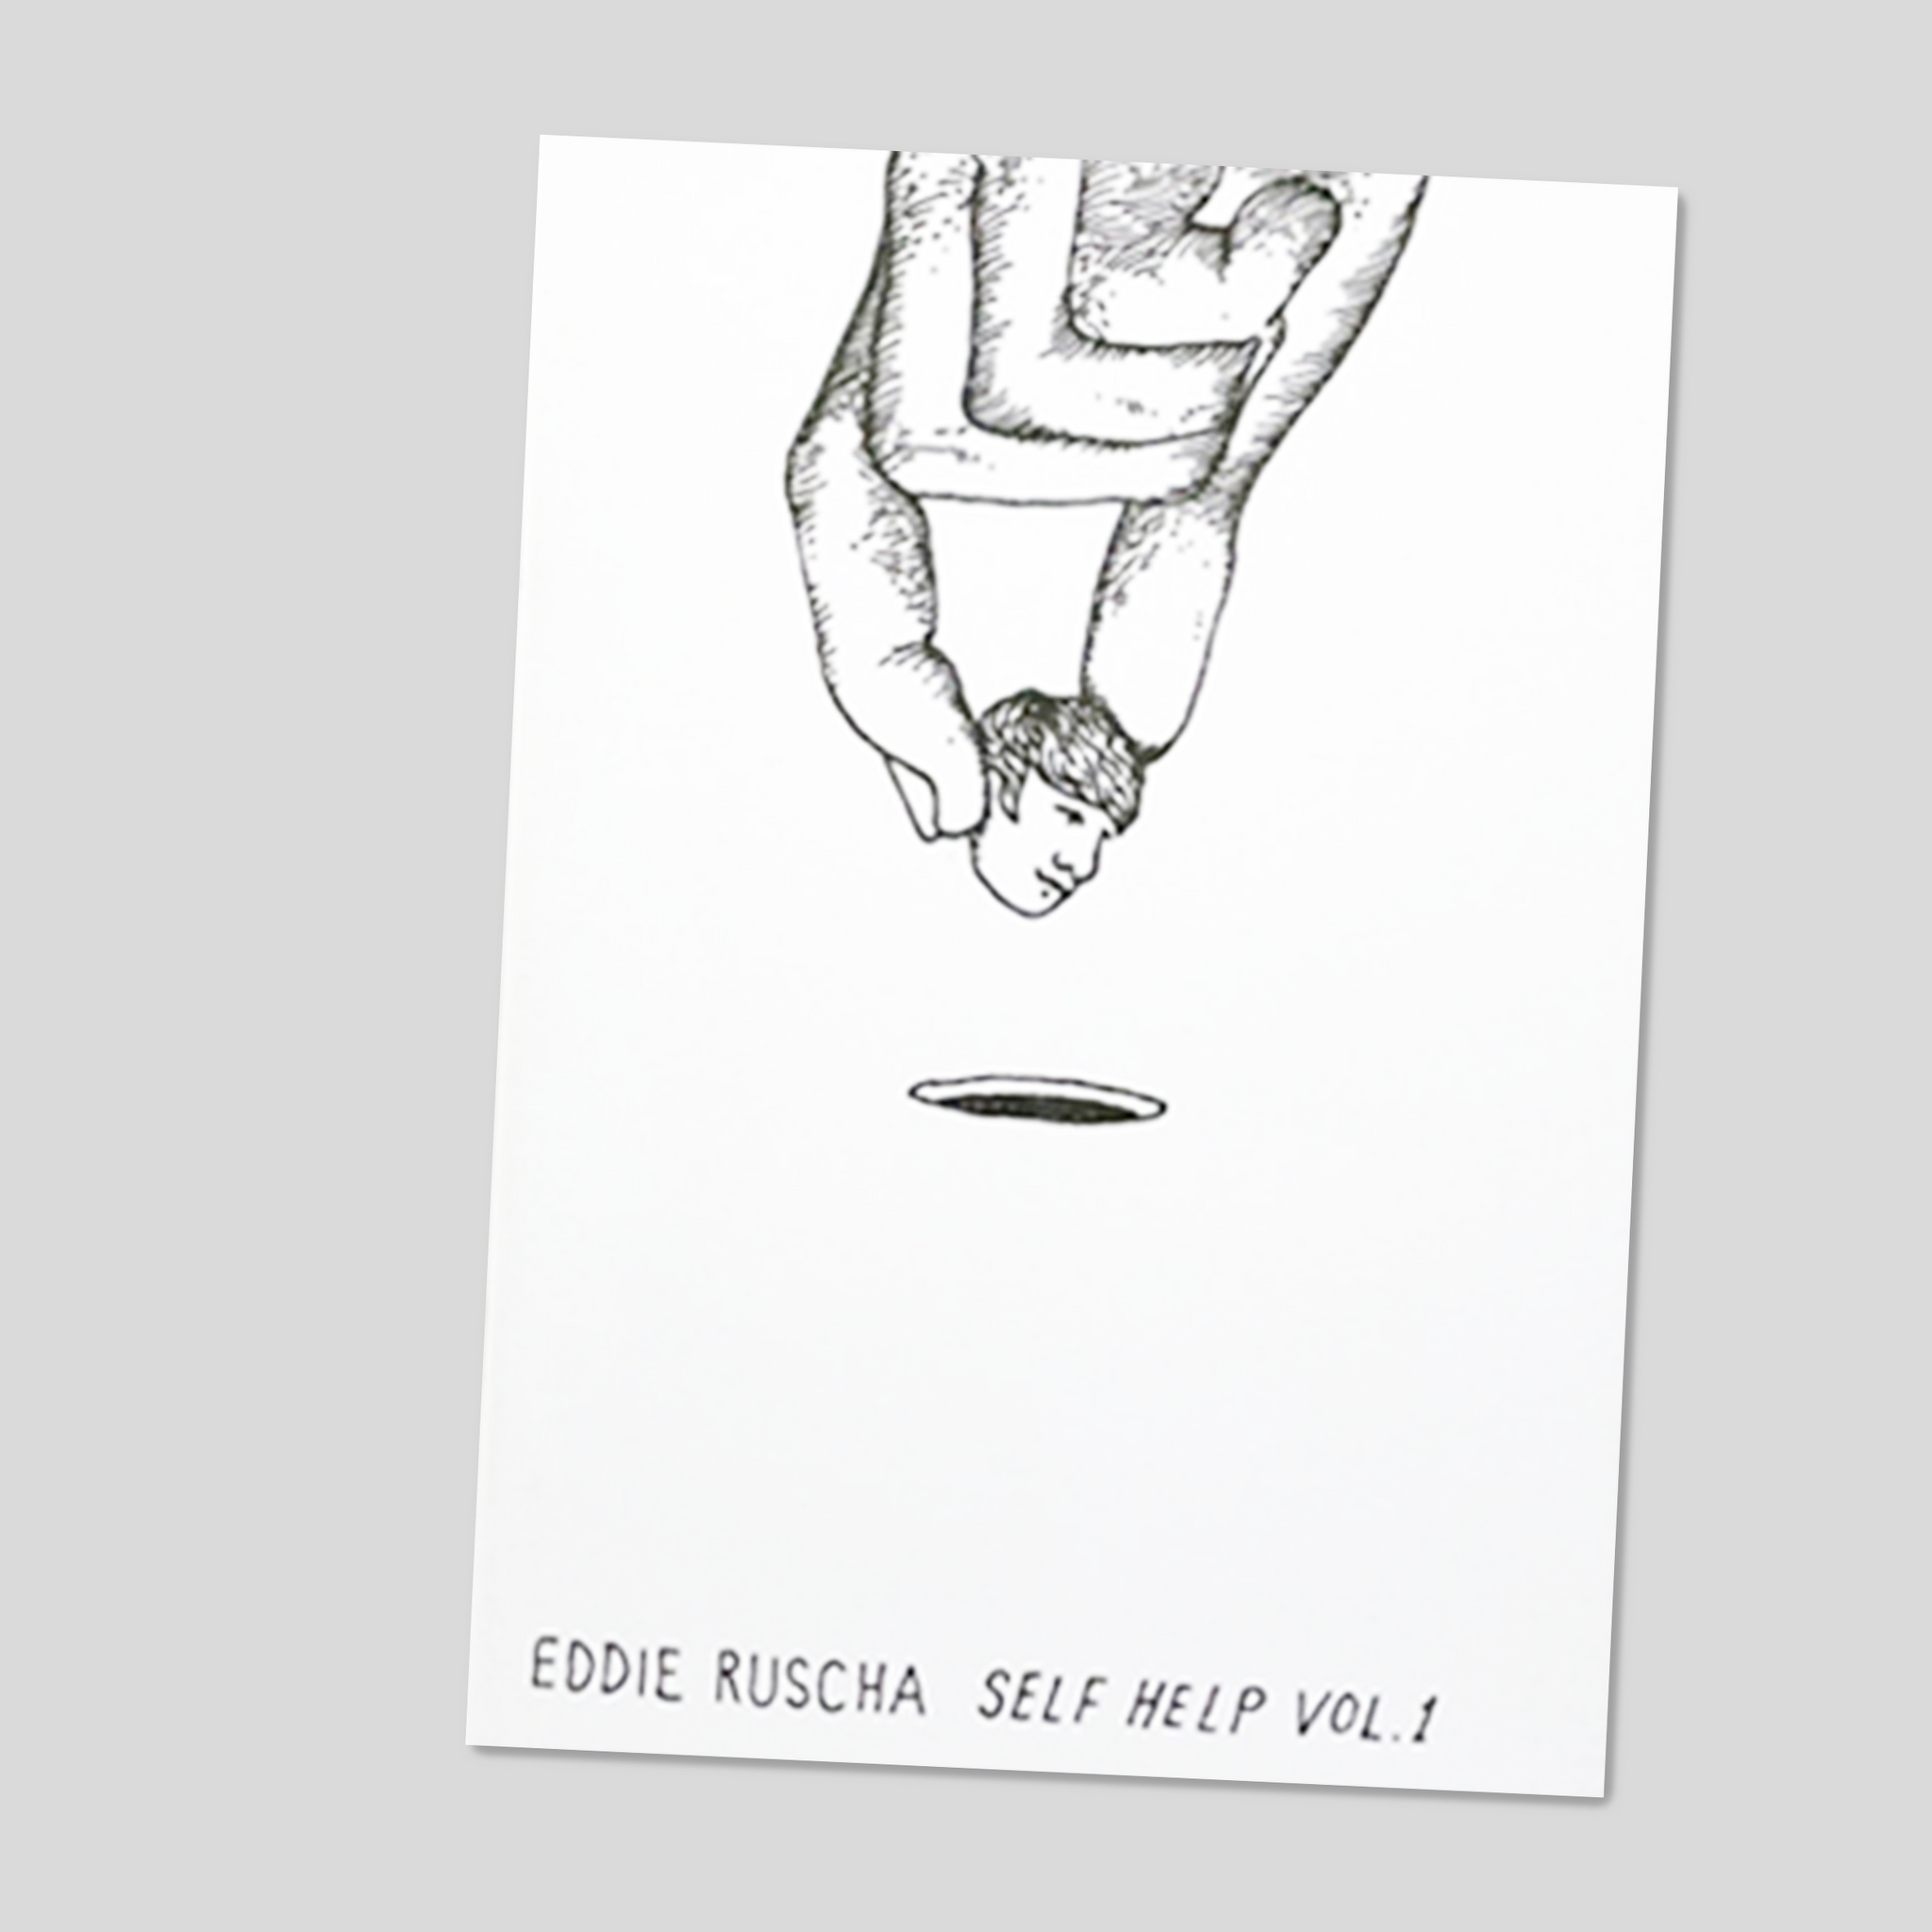 Self Help Vol.1- Eddie Ruscha